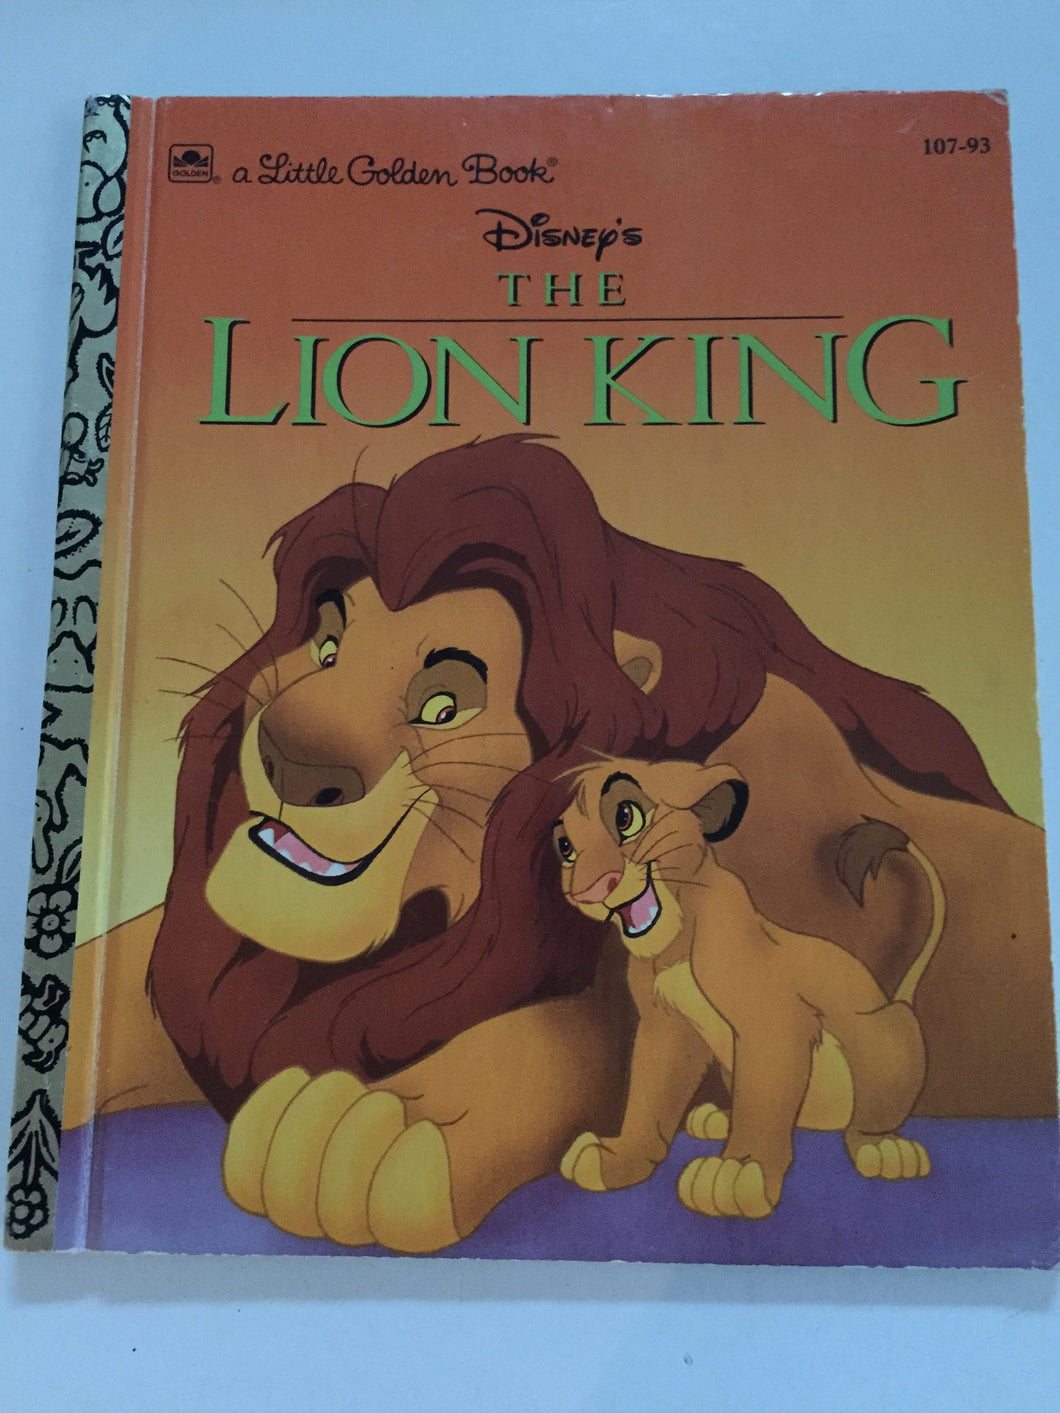 Disney's The Lion King - Slick Cat Books